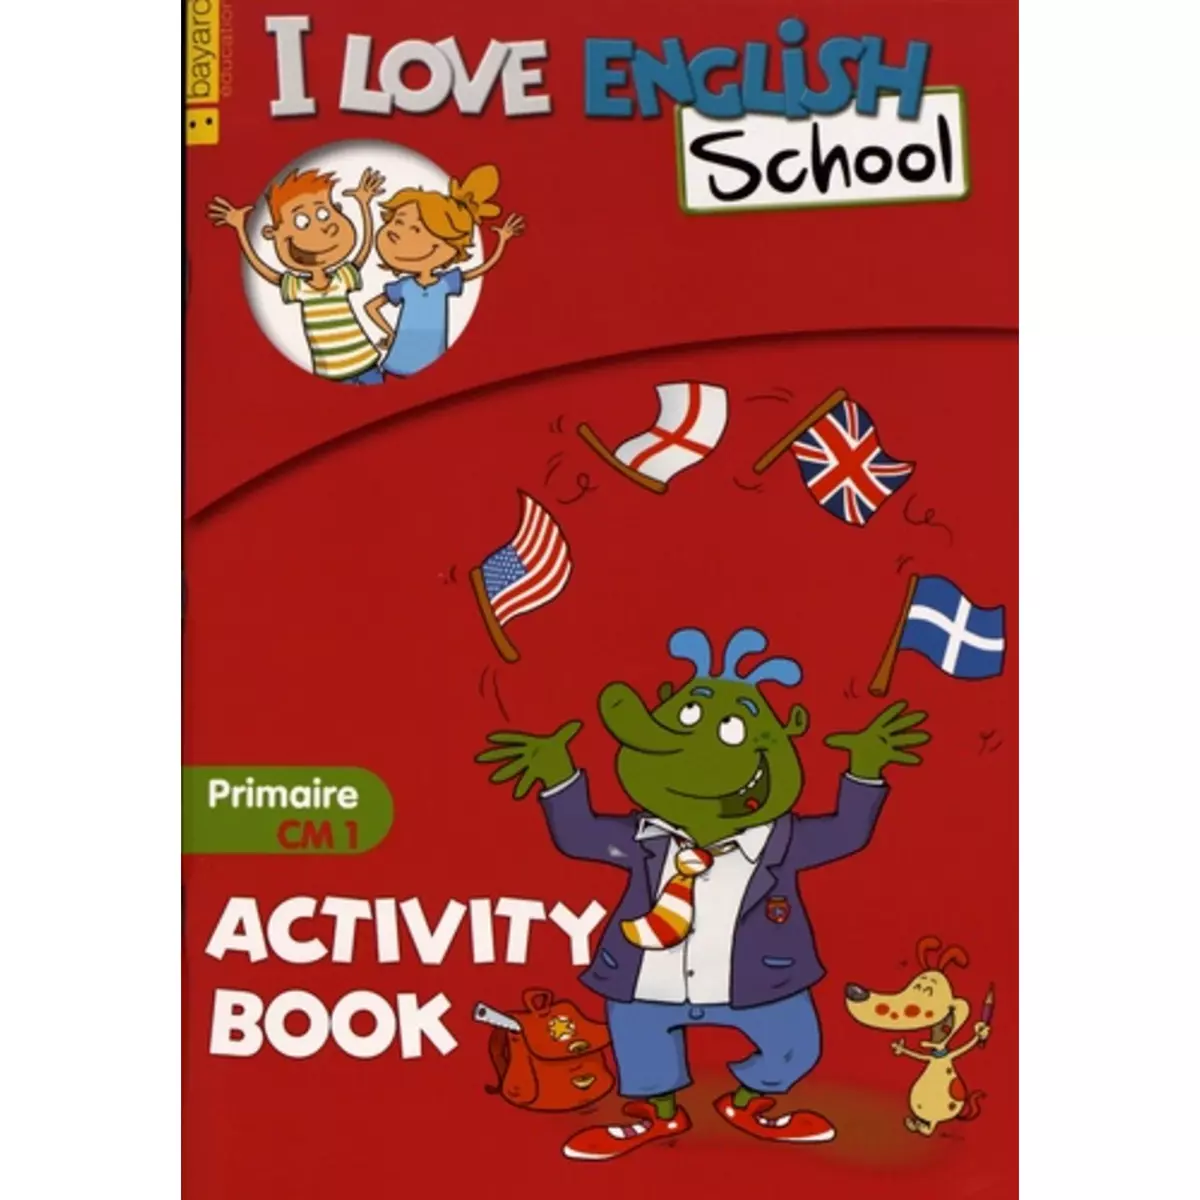  I LOVE ENGLISH SCHOOL. ACTIVITY BOOK PRIMAIRE CM1, Menneret Valérie